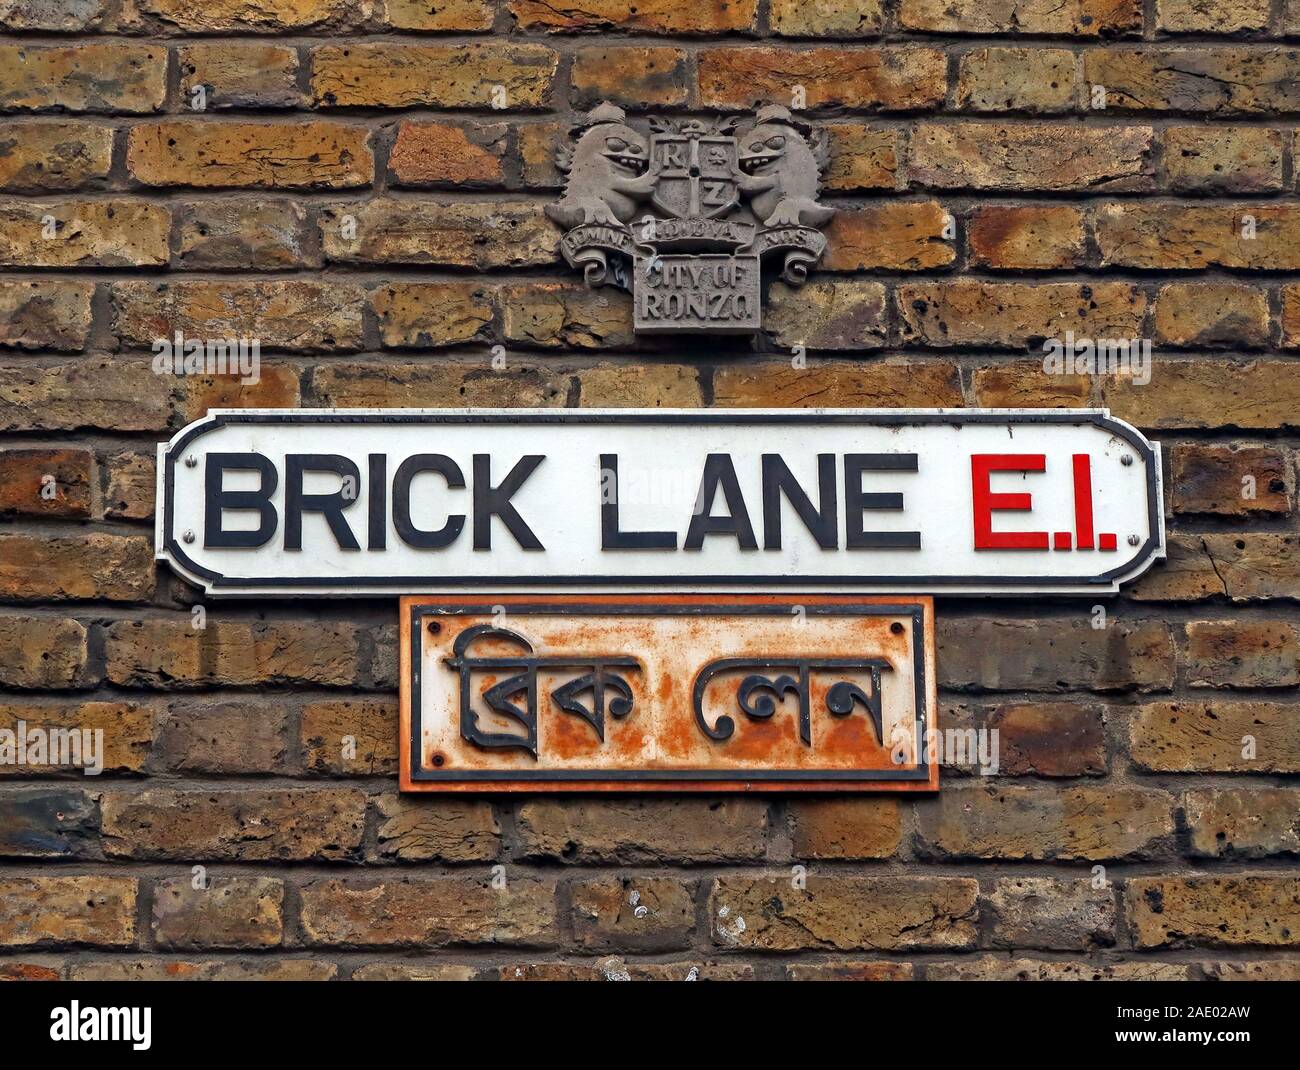 Brick Lane E1 street sign, east end,London,England,UK, E1 Stock Photo